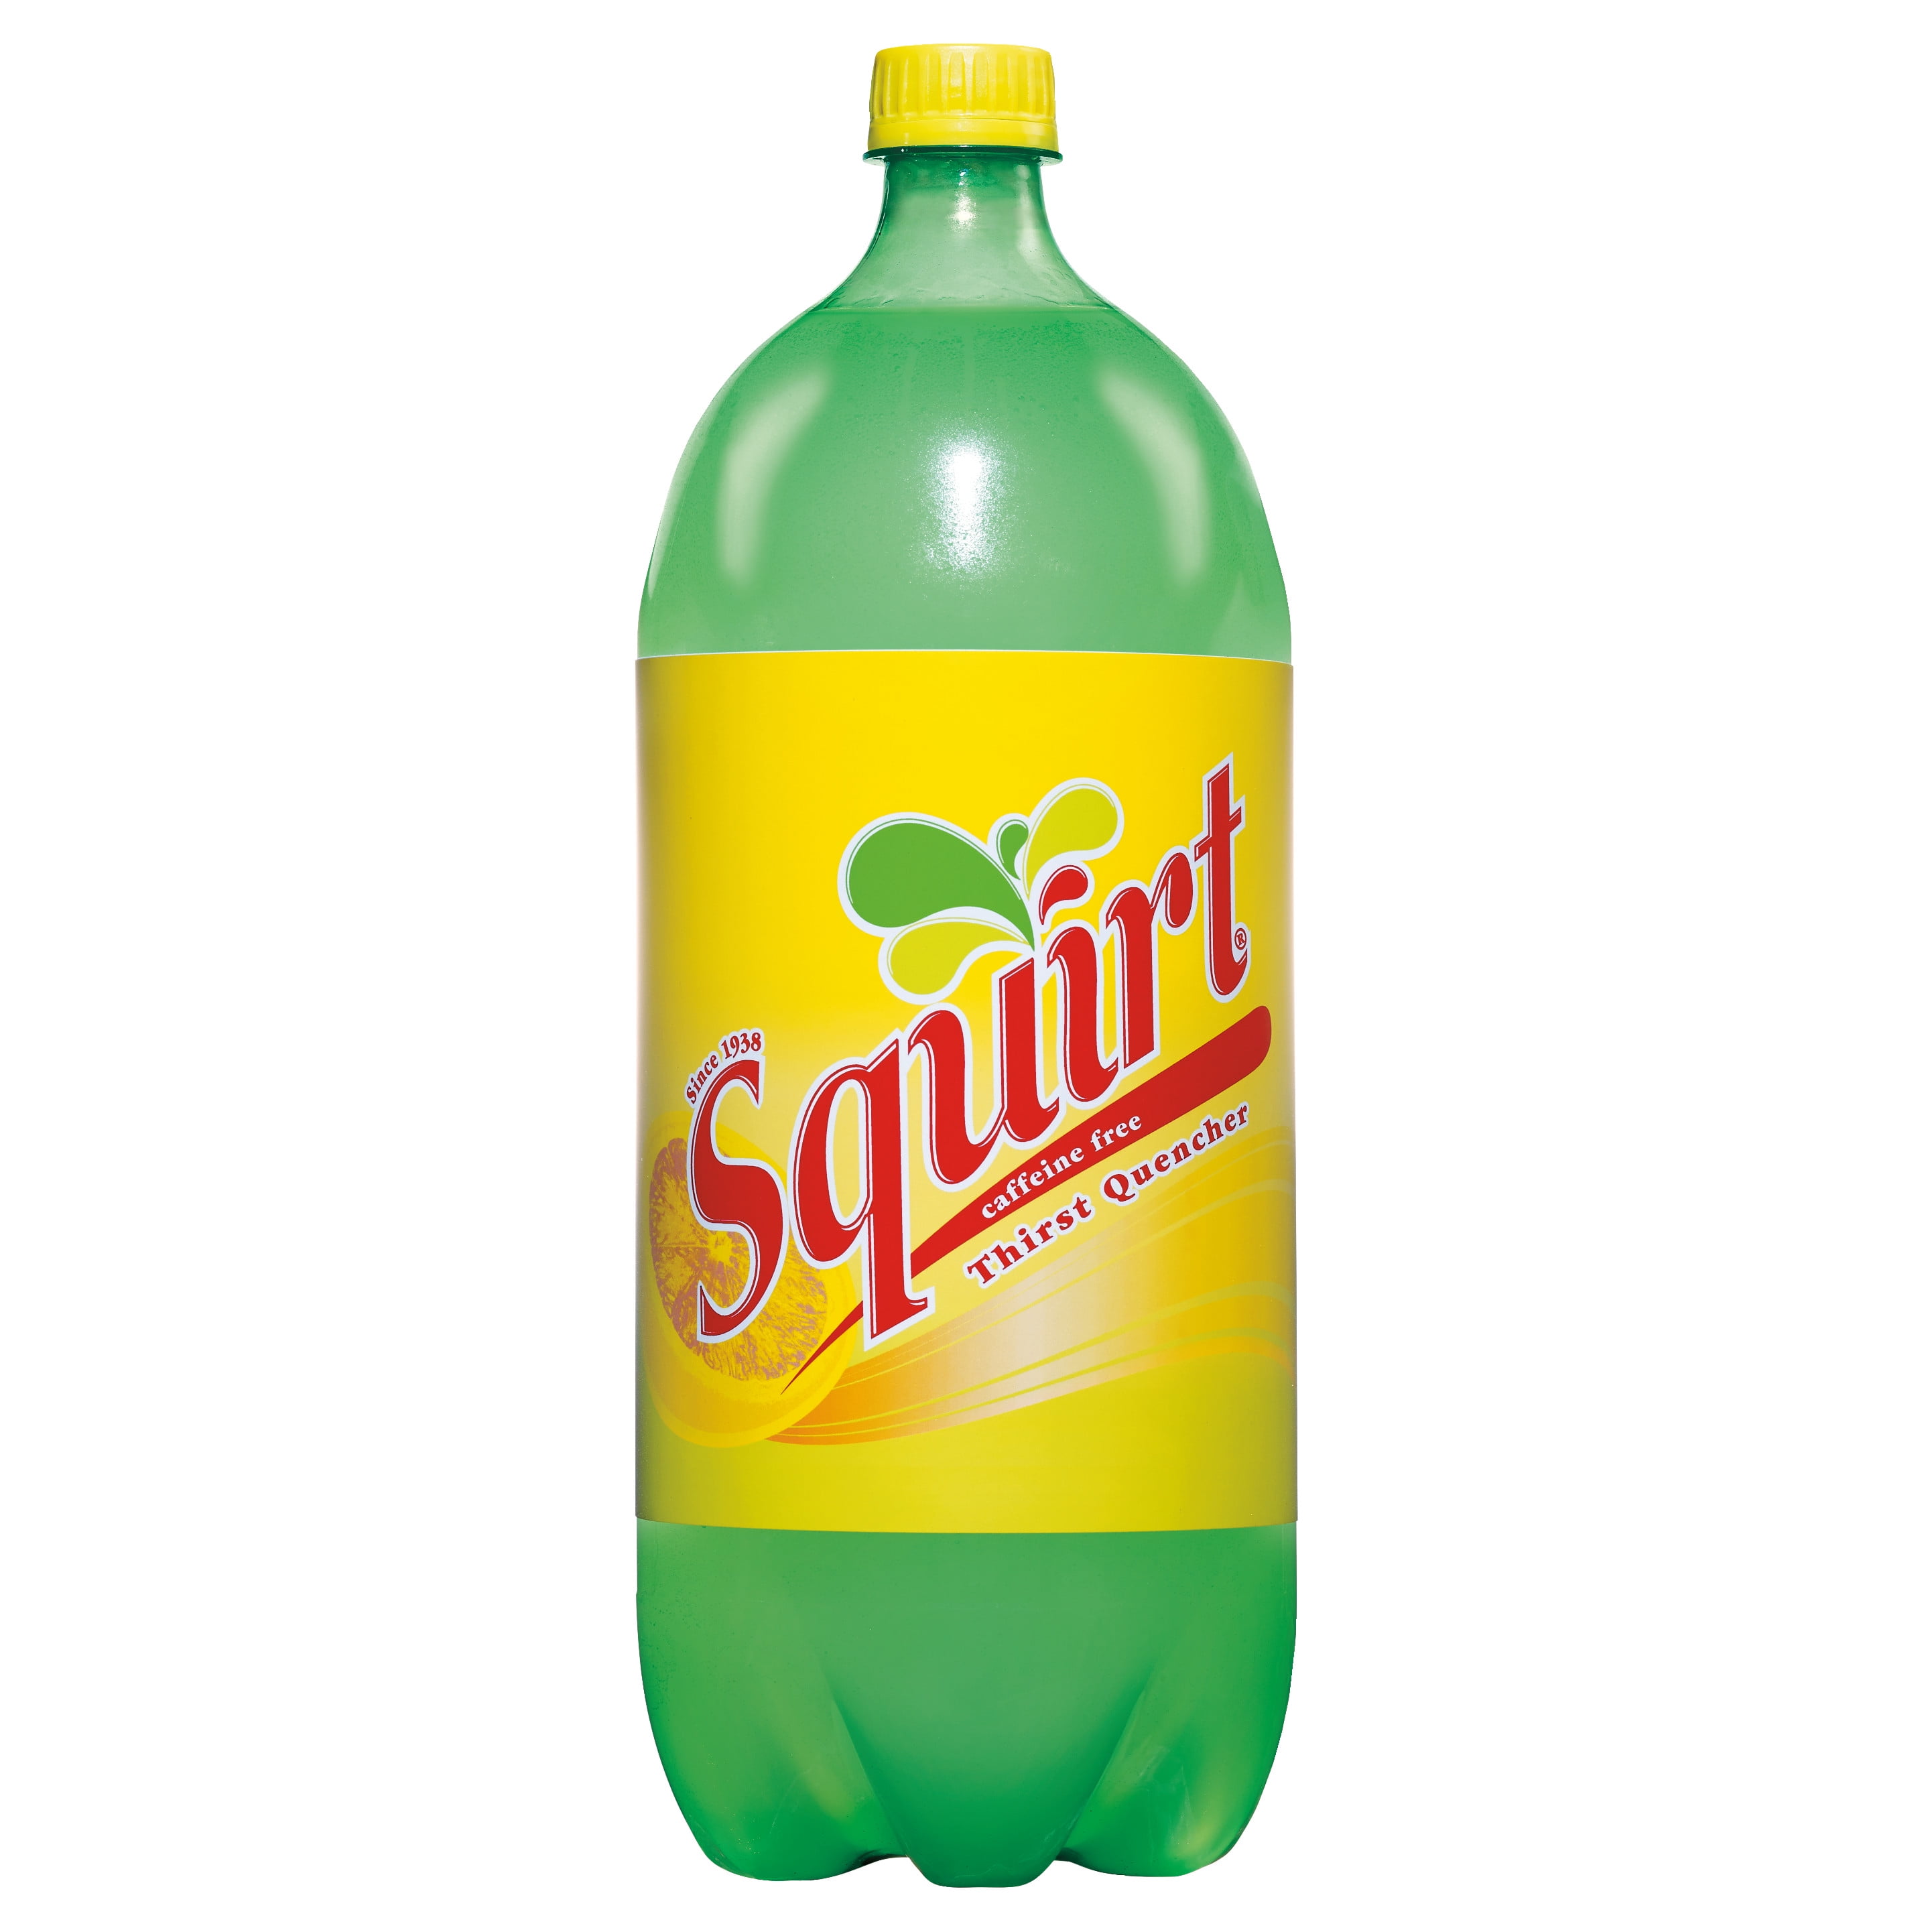 Soft drink squirt bottles